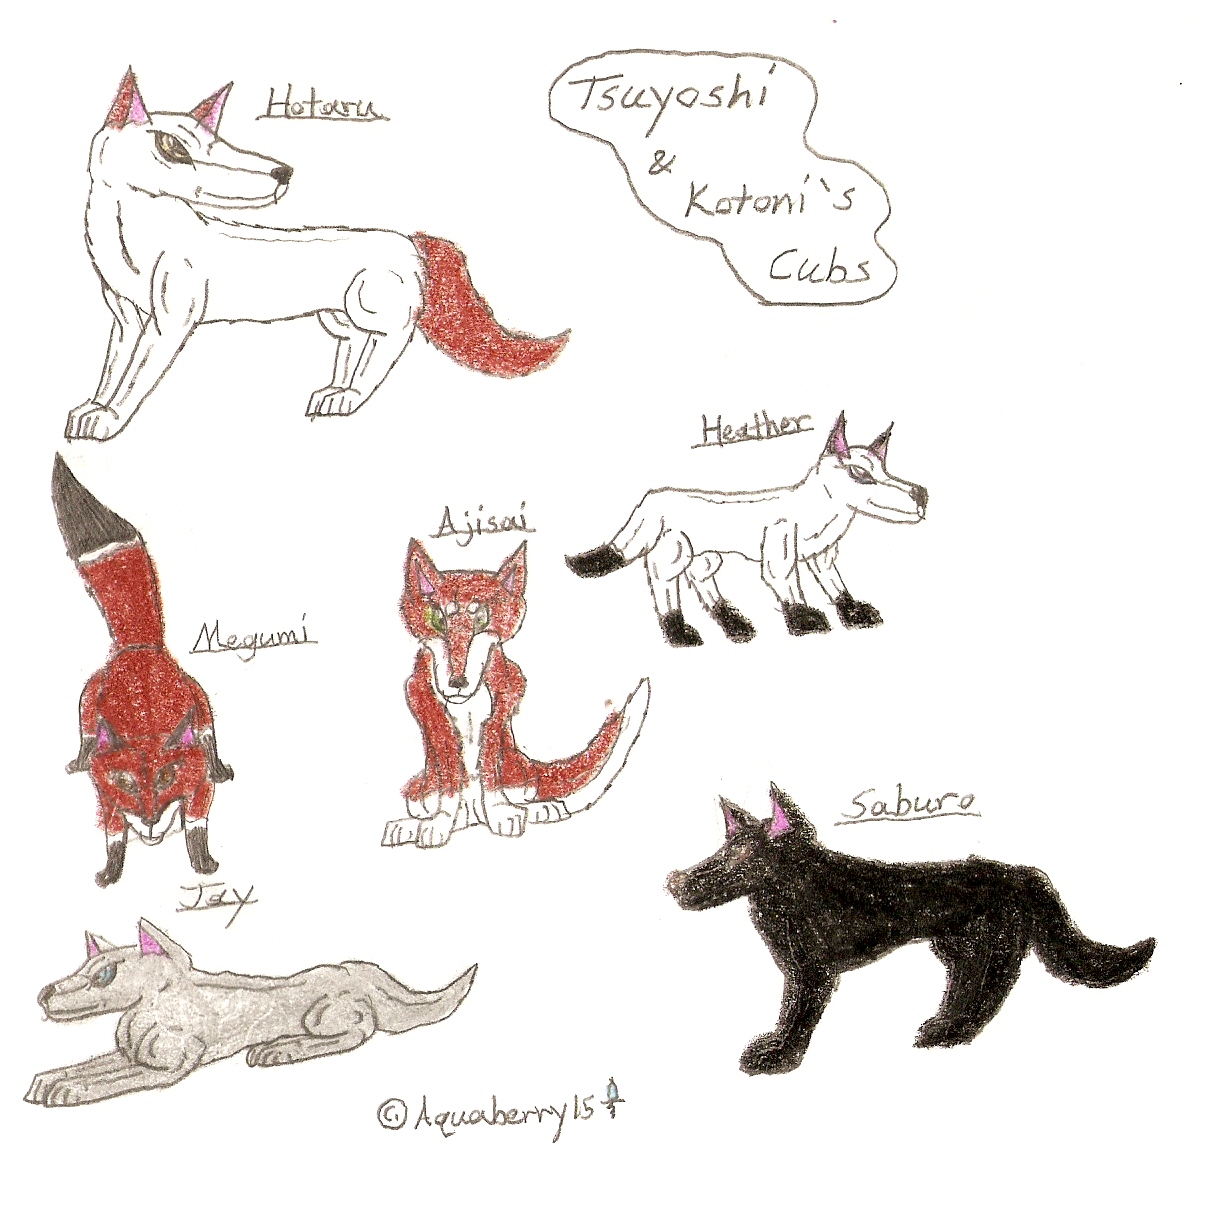 Tsuyoshi and Kotoni's Cubs by Aquaberry15